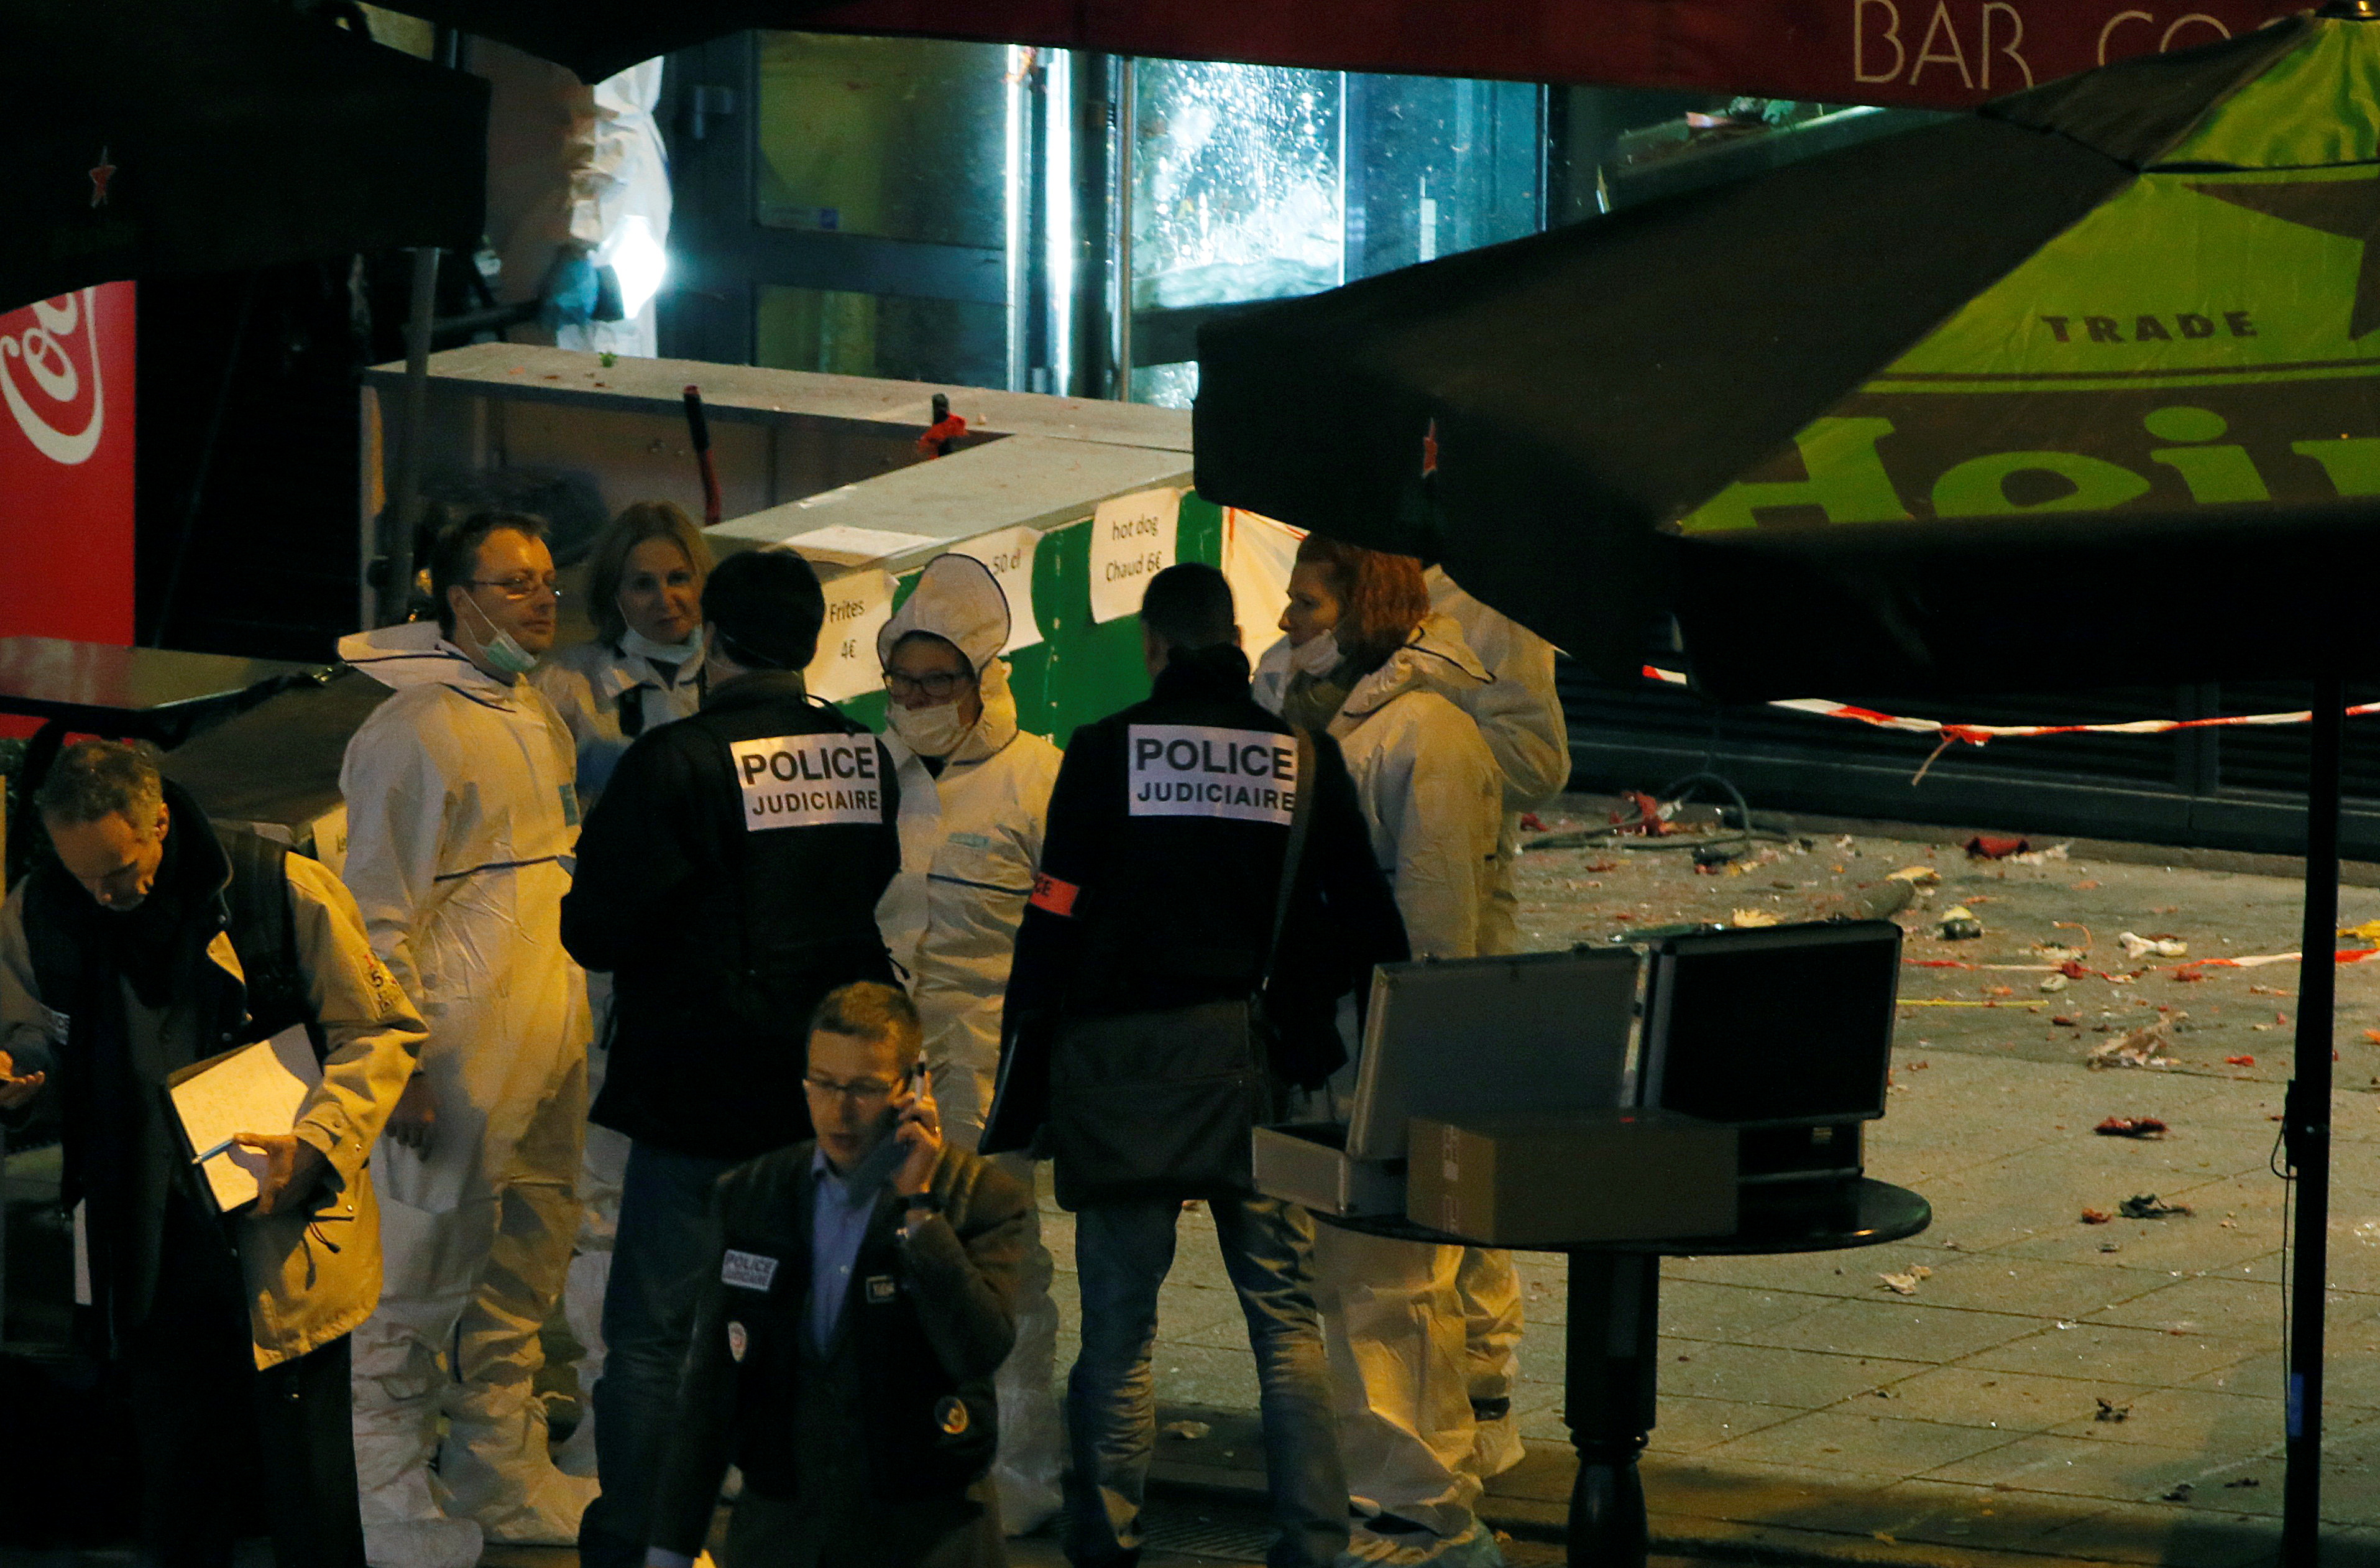 27 ноября 2015. Террористическая атака на стадион. Теракт в Париже 13 ноября фото.